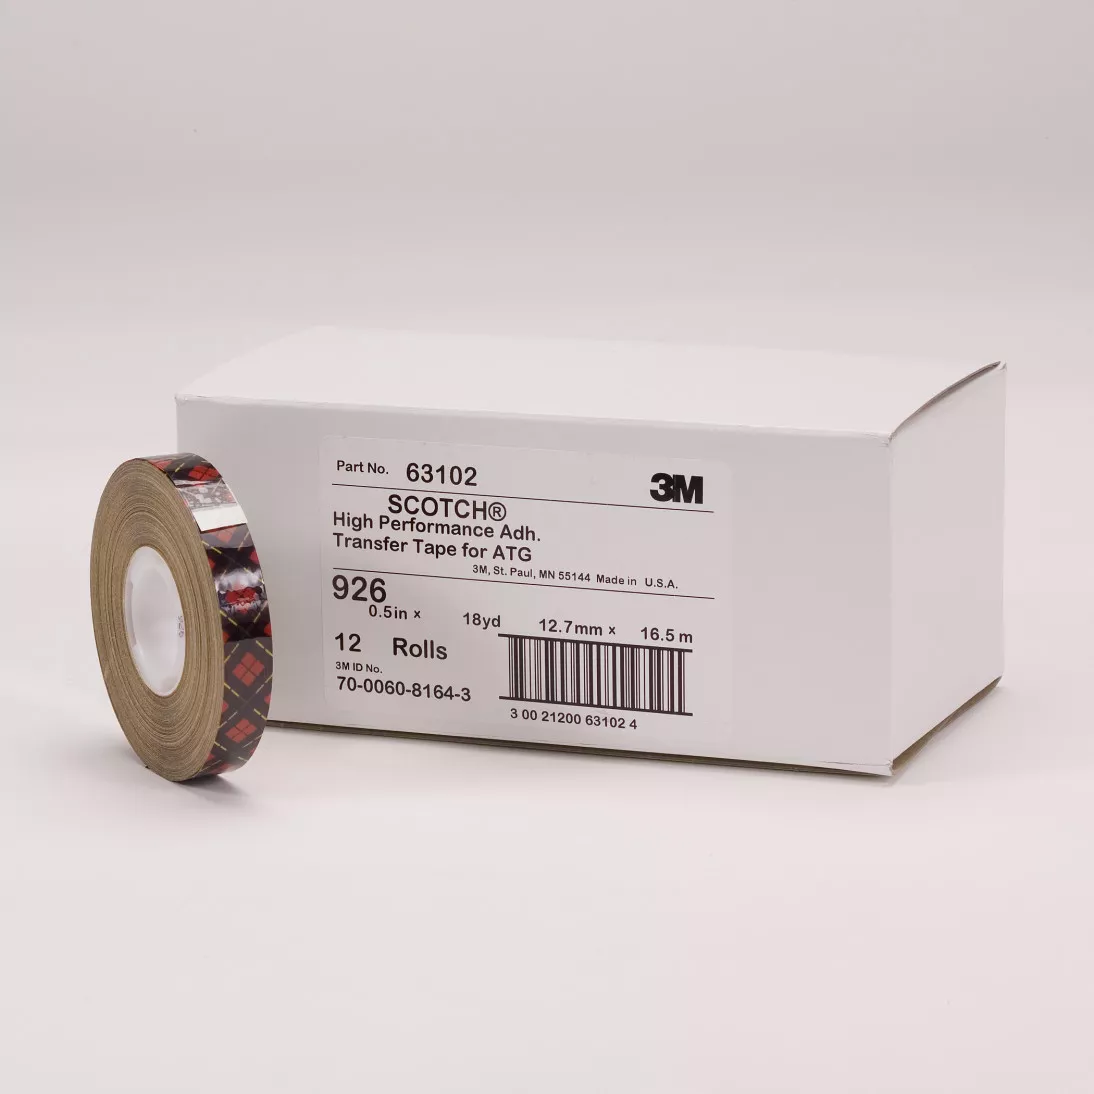 Scotch® ATG Adhesive Transfer Tape 926, Clear, 1/4 in x 36 yd, 5 mil,
144 per case